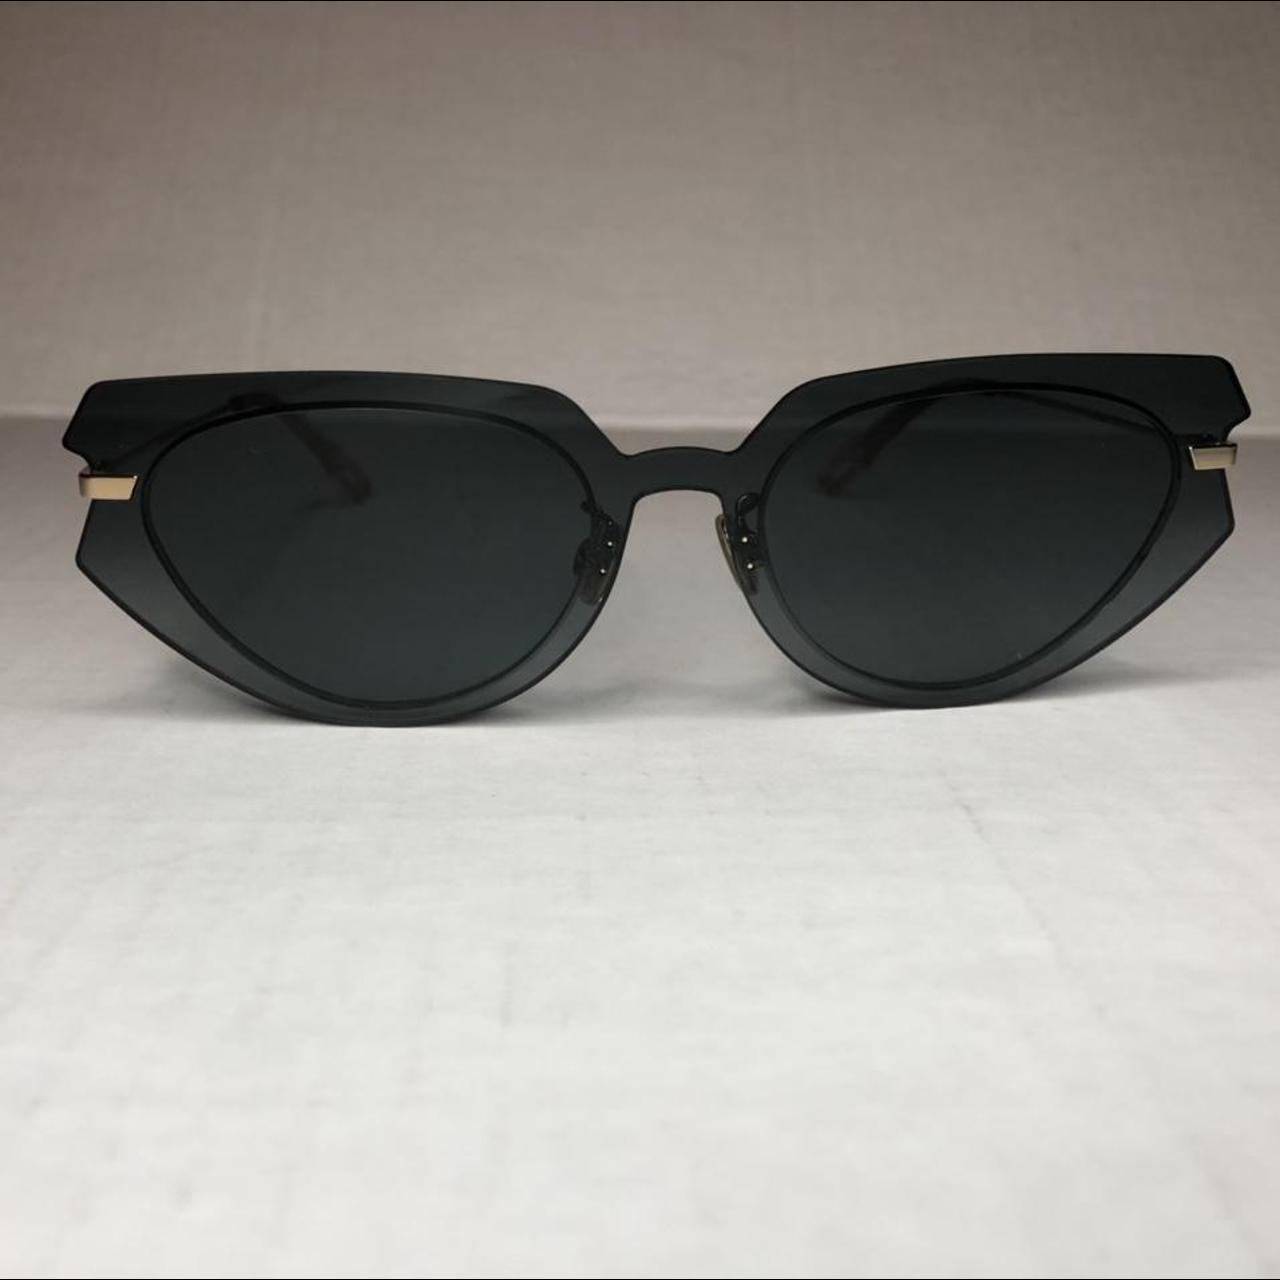 Black Christian Dior sunglasses in excellent... - Depop